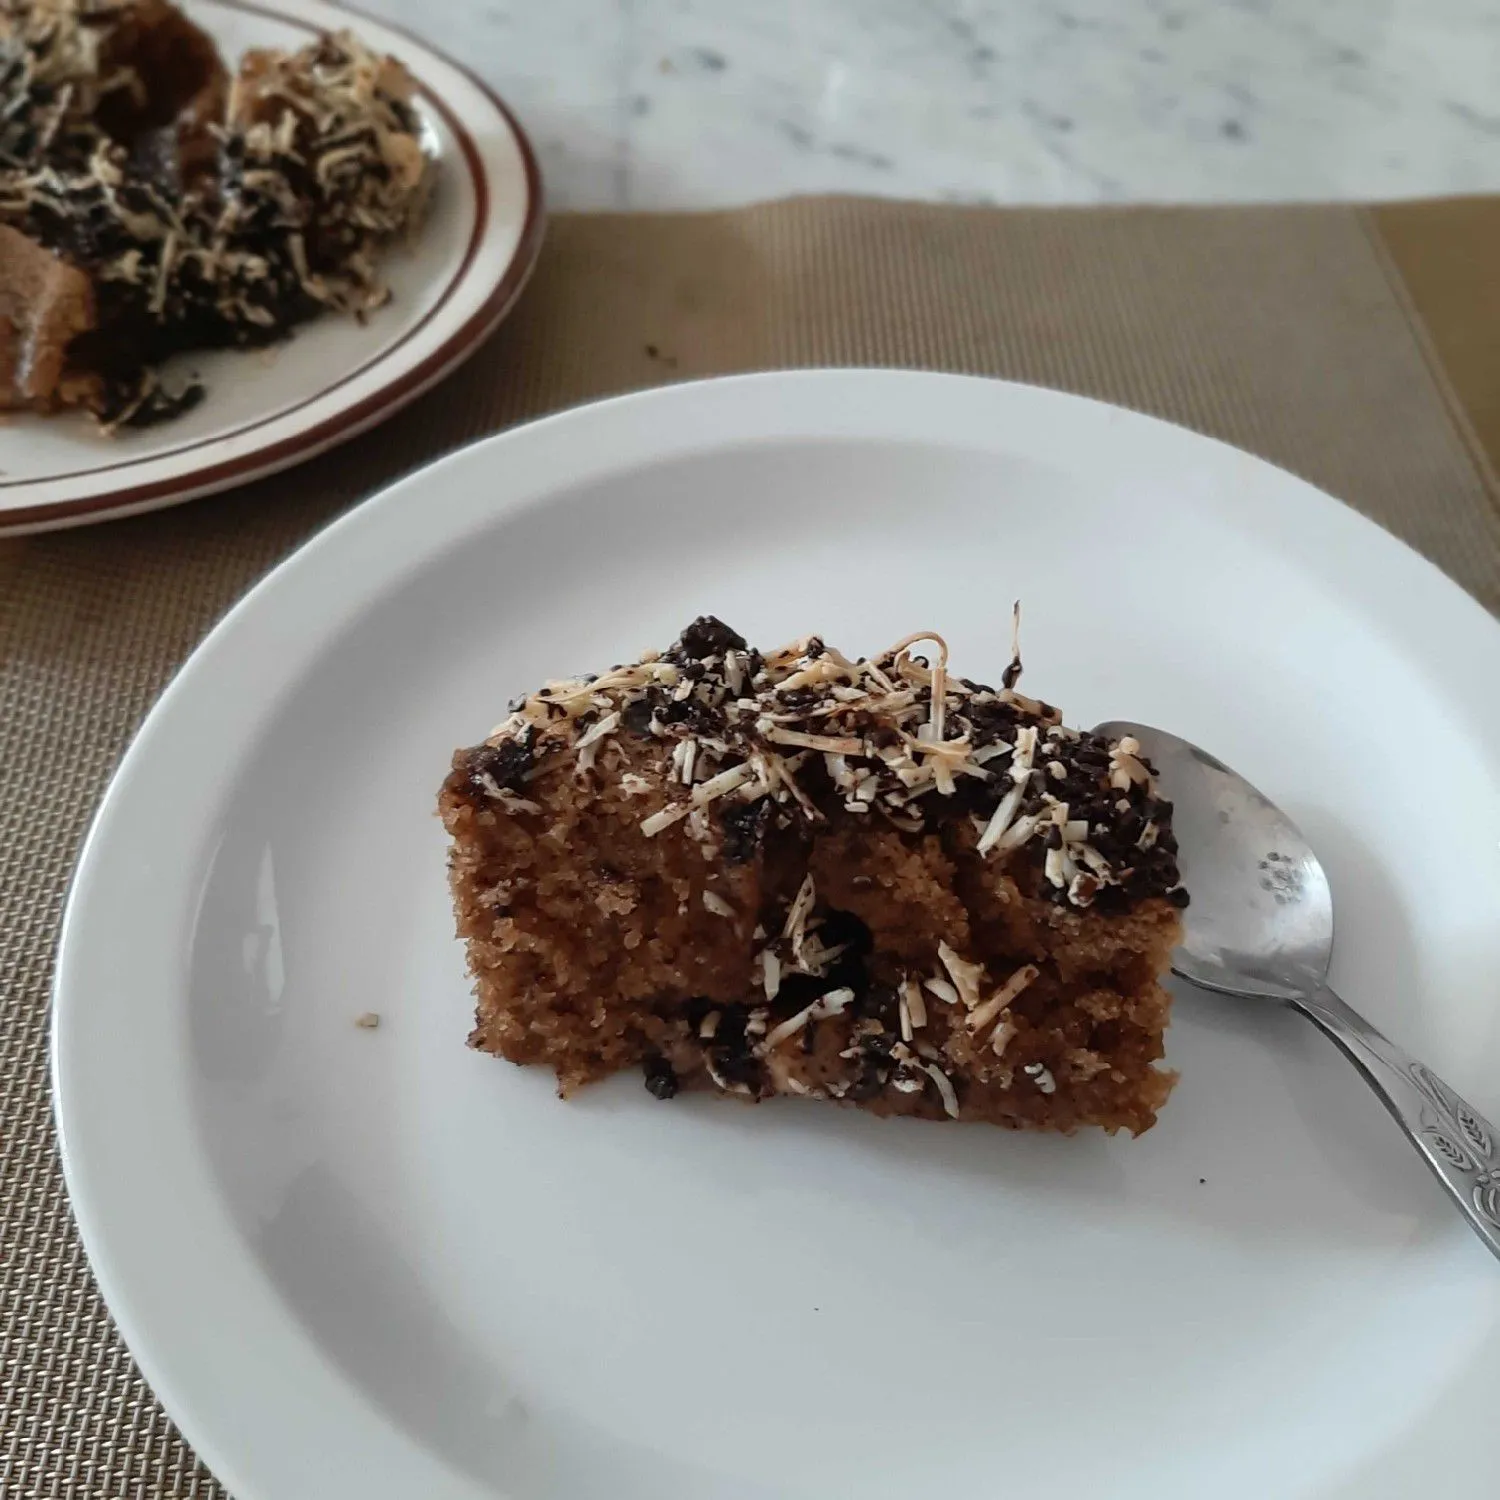 Earl Grey Chococheese Cake #JagoMasakMinggu2Periode2